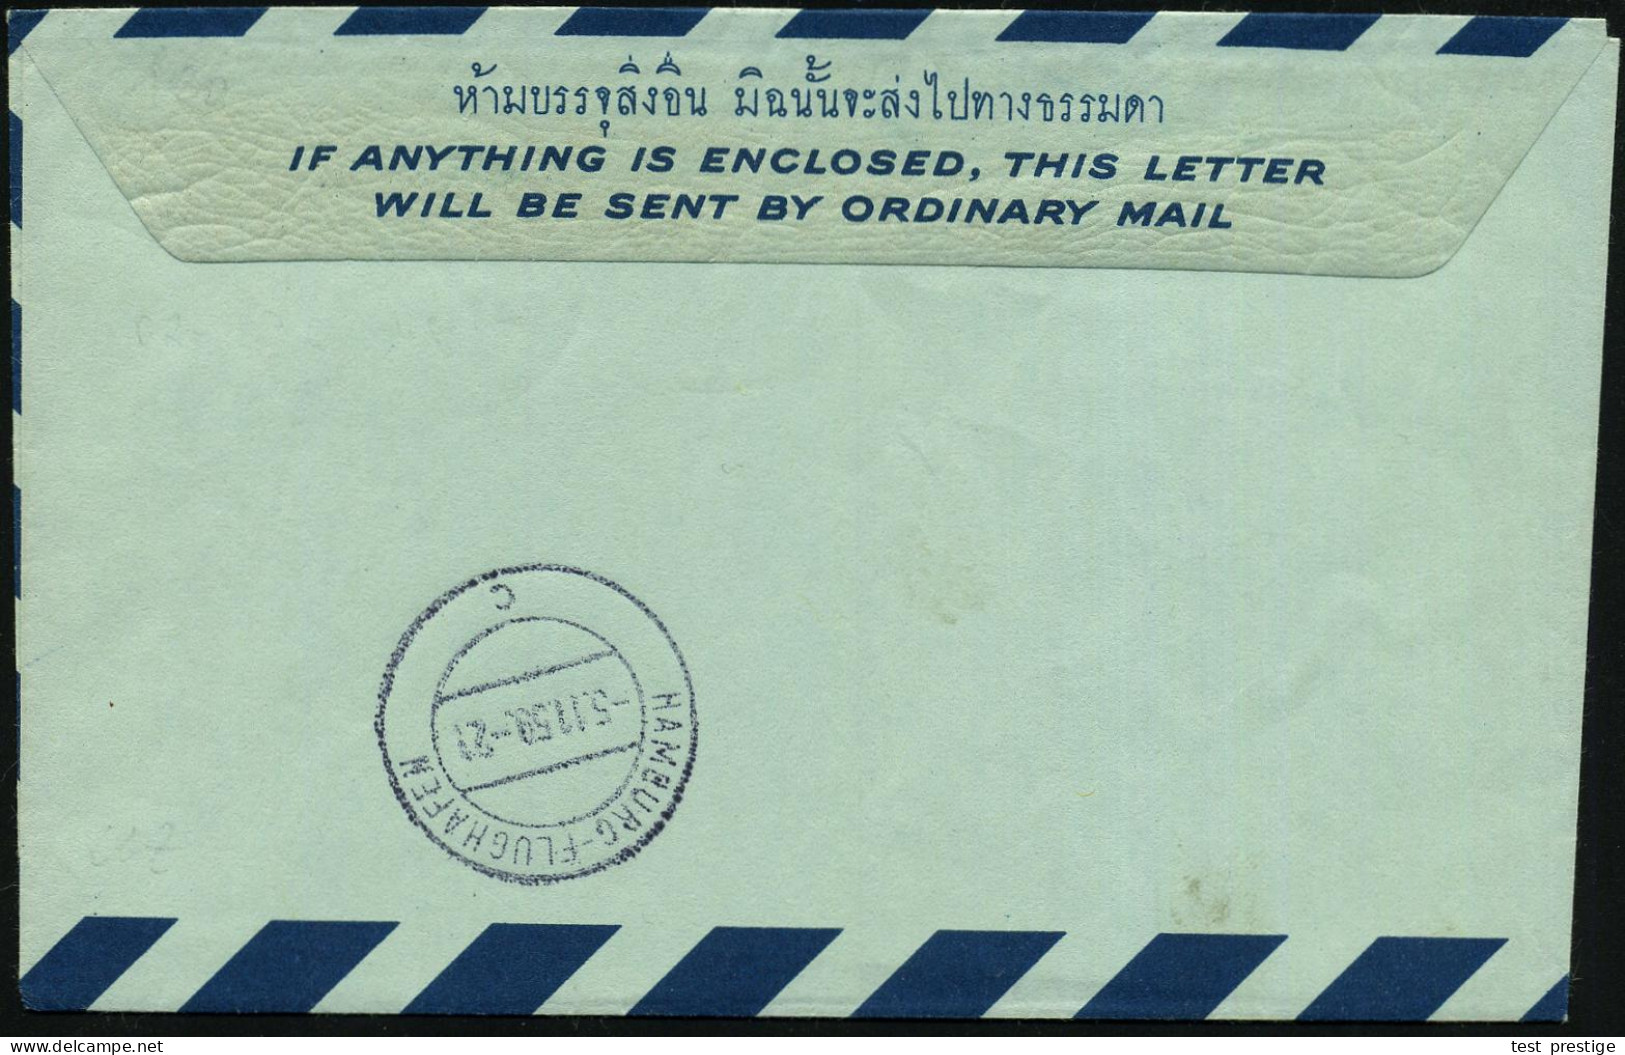 THAILAND 1959 (4.1.) 3 B. Aerogramm "Garuda", Blau , 1K-Brücke: BANGKOK + Viol. HdN: LUFTHANSA/ BANGKOK - HAMBURG / .. F - Autres (Air)